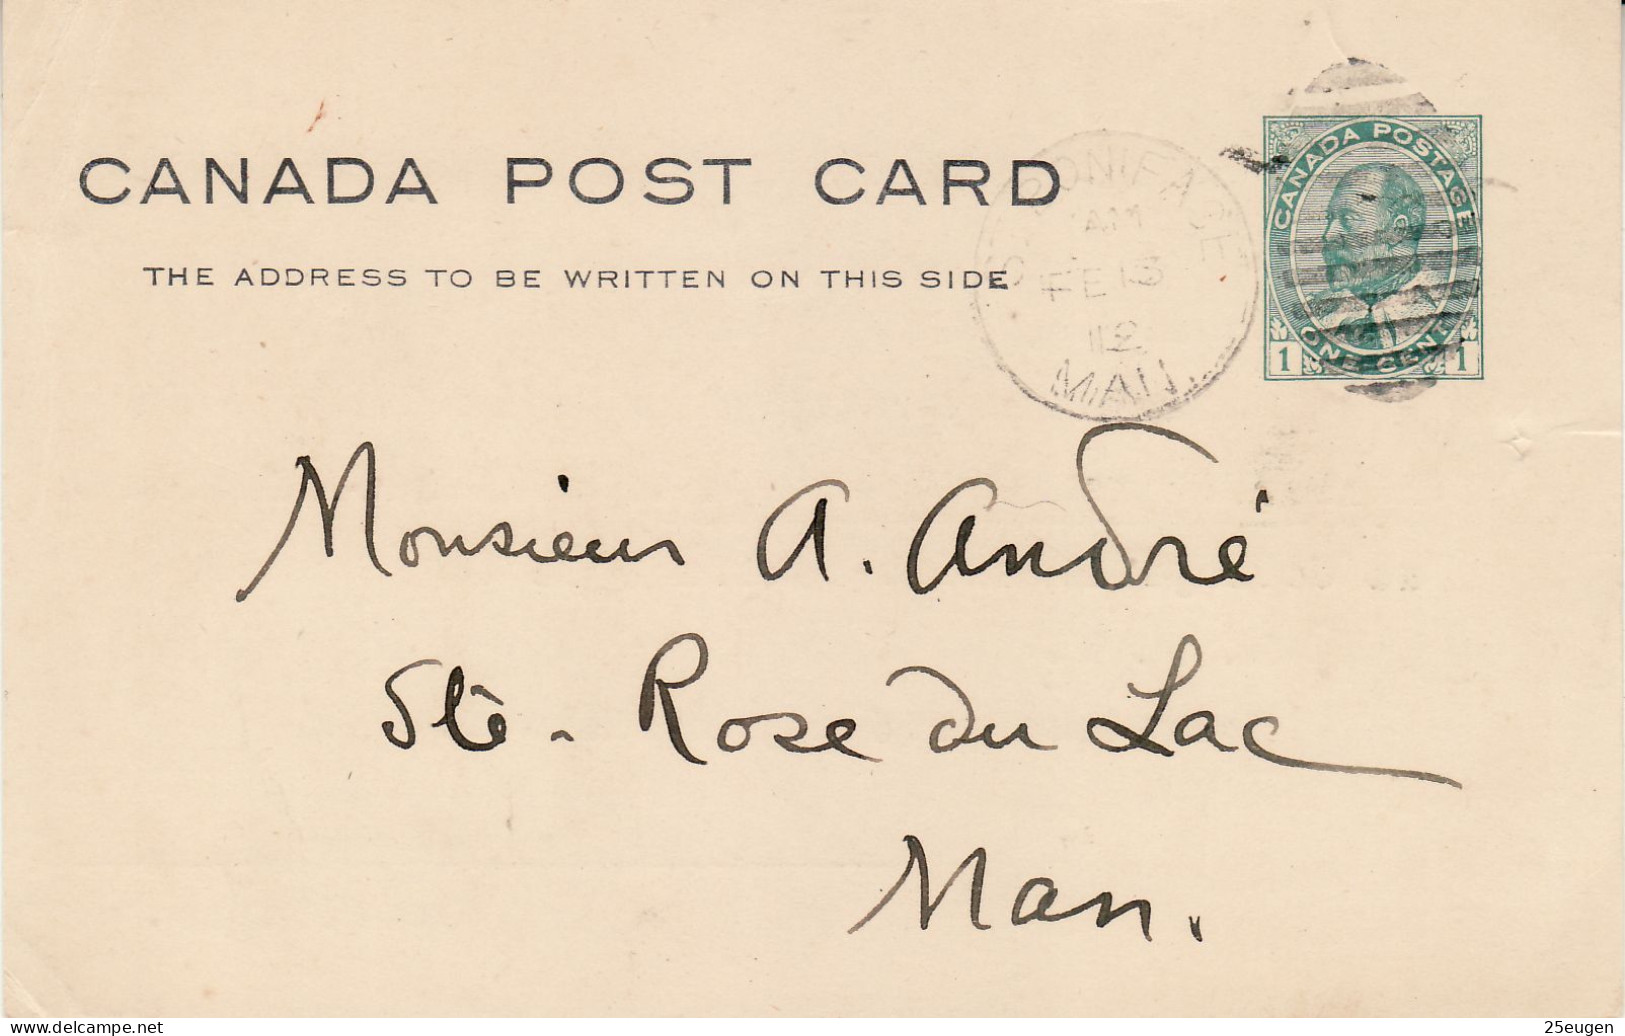 CANADA 1912  POSTCARD  SENT FROM SAINT-BONIFACE - Briefe U. Dokumente